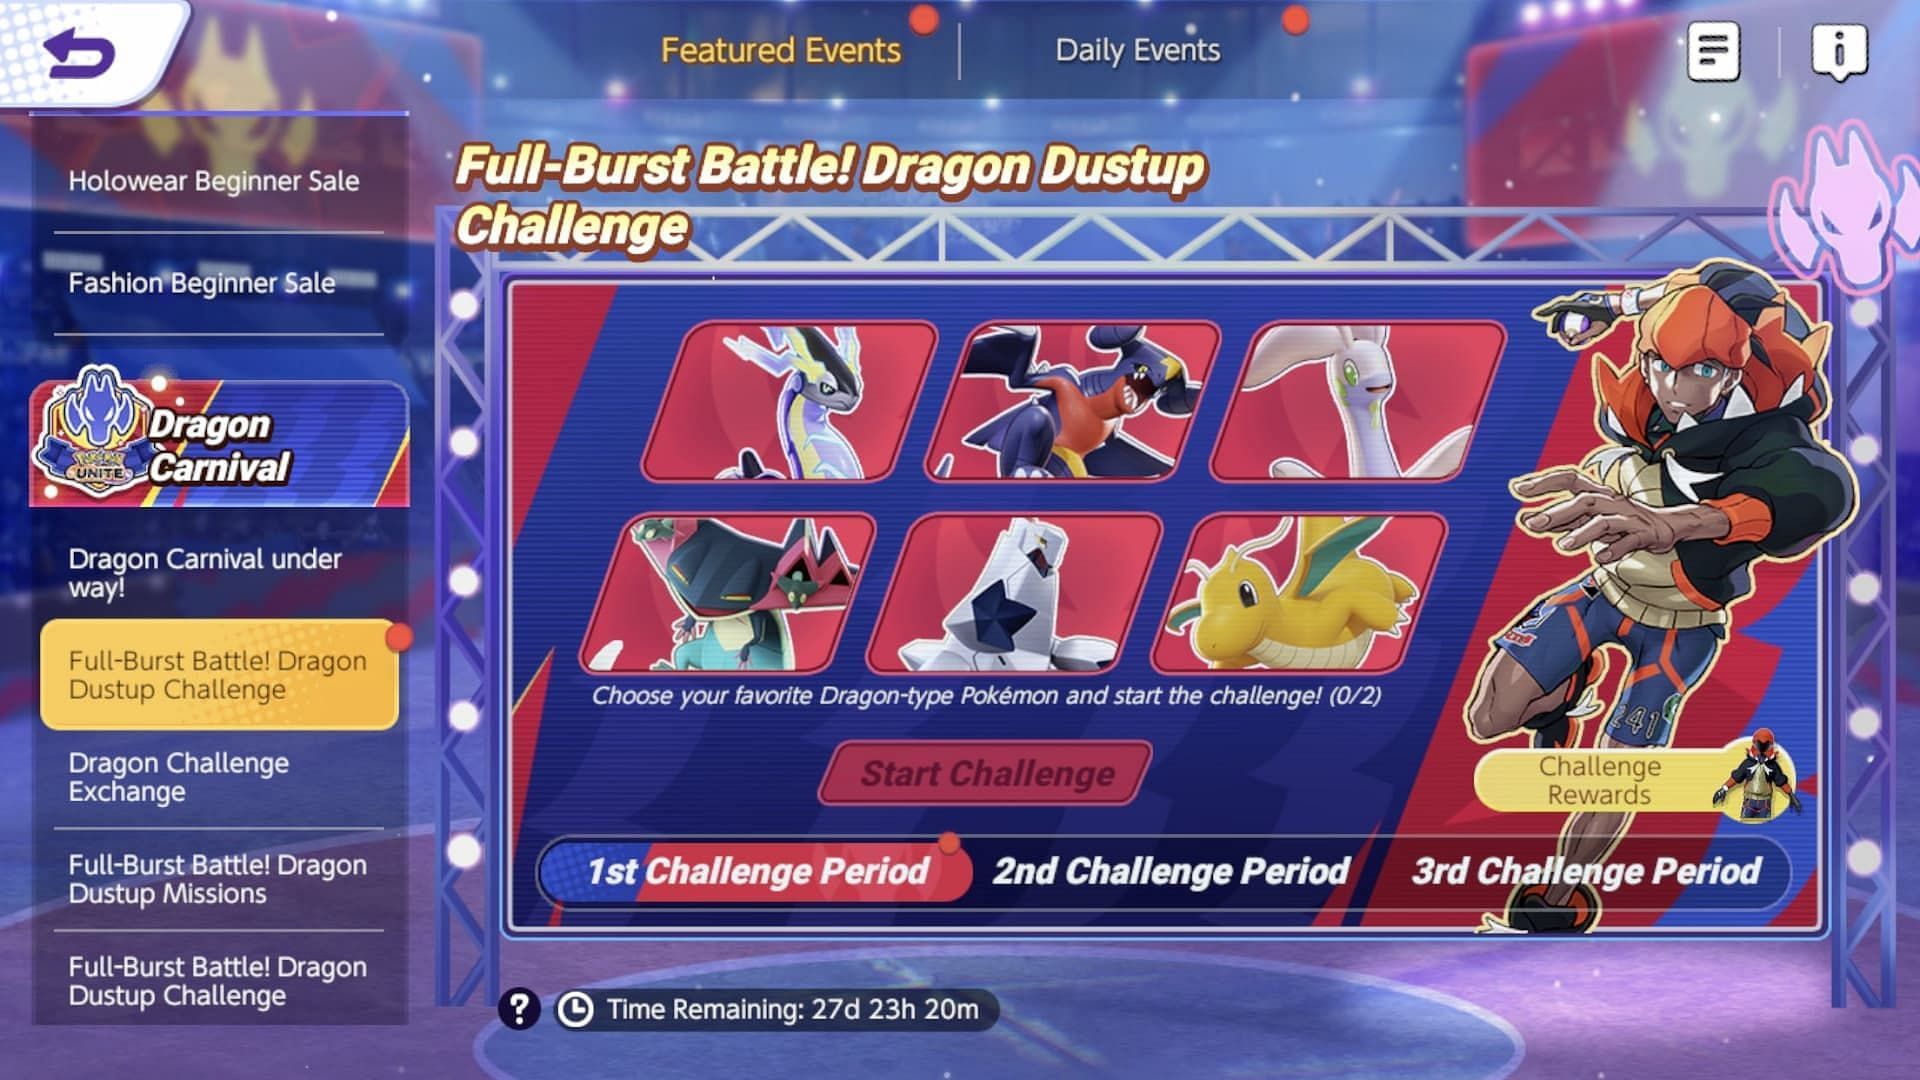 Full-burst Battle Dragon Dustup Challenge license-picking screen (Image via The Pokemon Company)